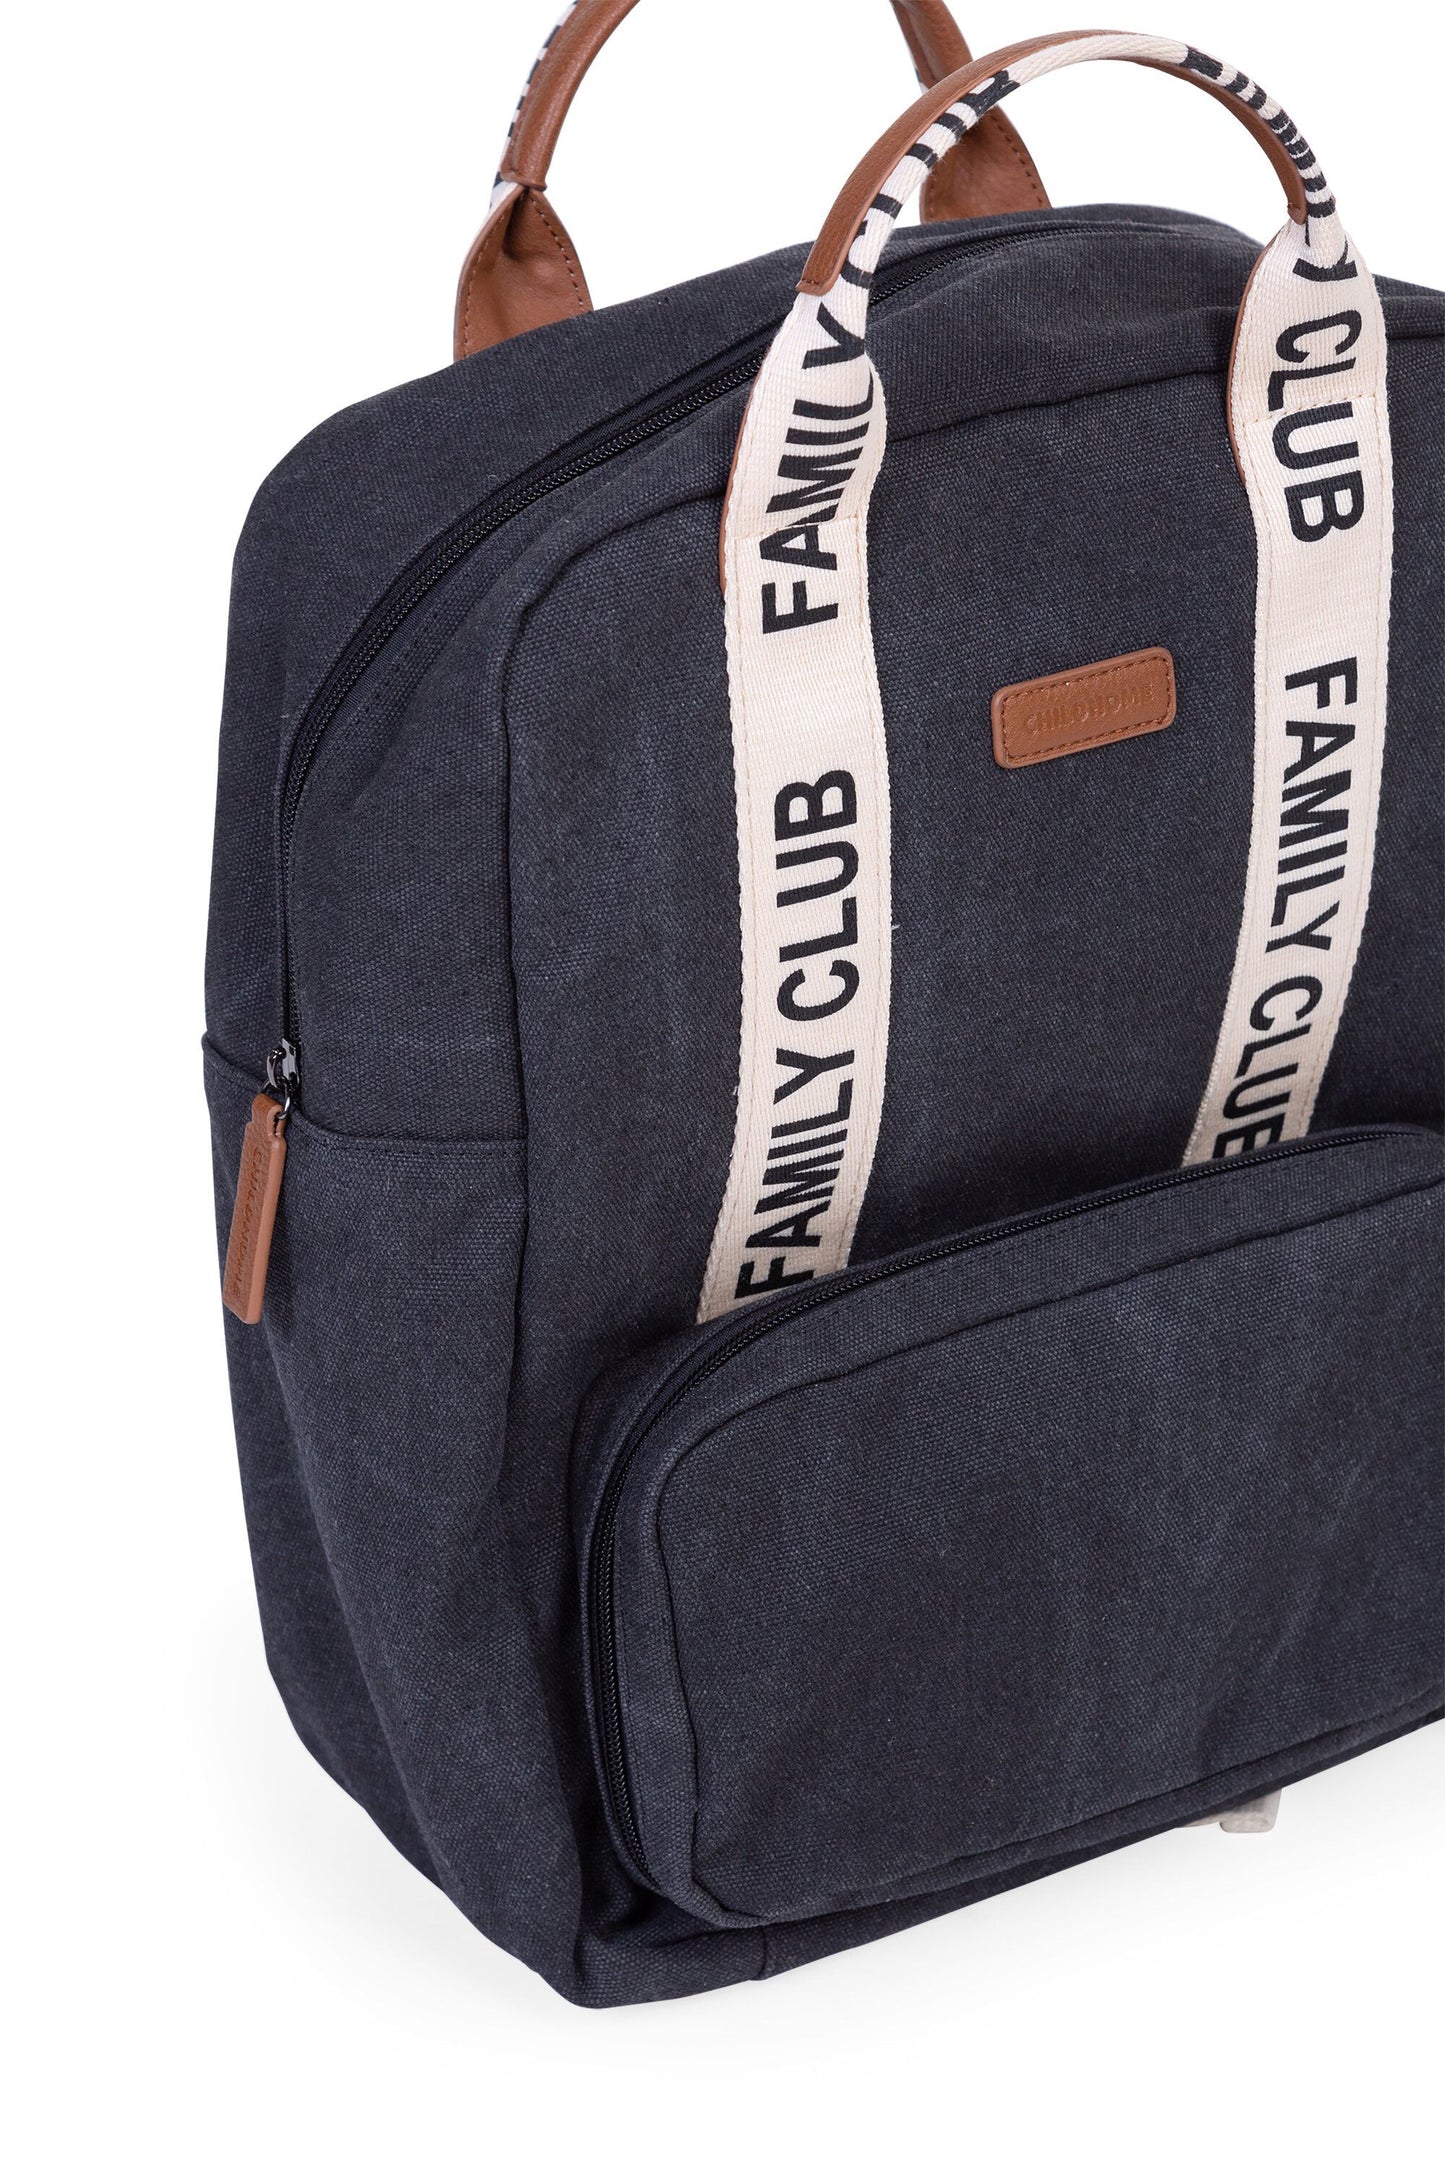 FAMILY CLUB ® - Backpack Black 